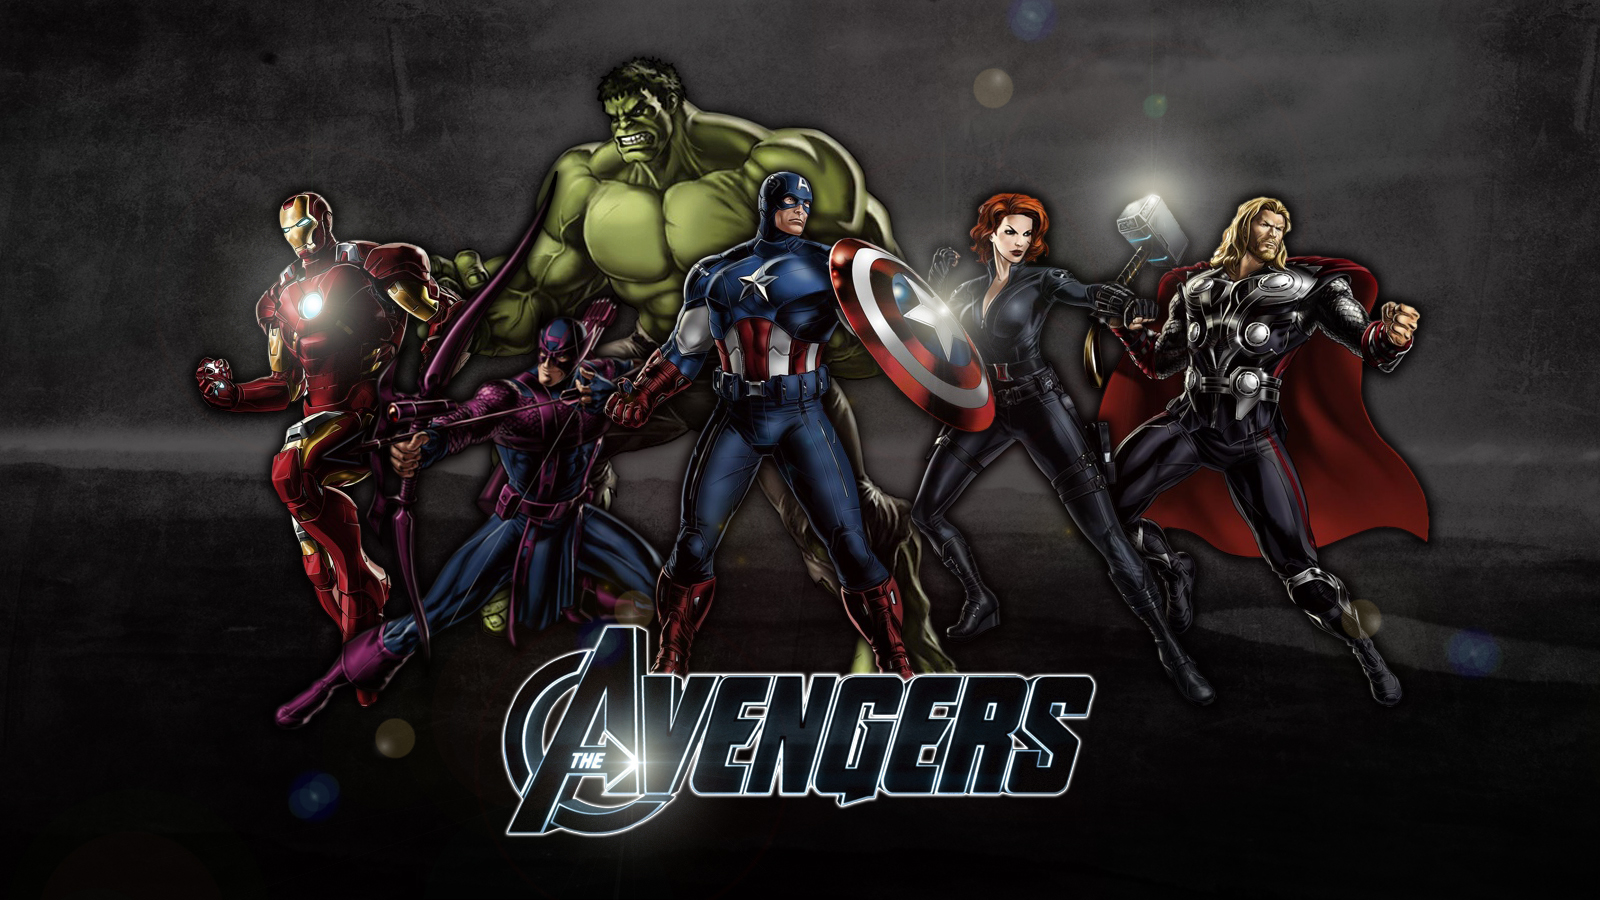 The Avengers Modern Wallpaper By Squiddytron On DeviantArt